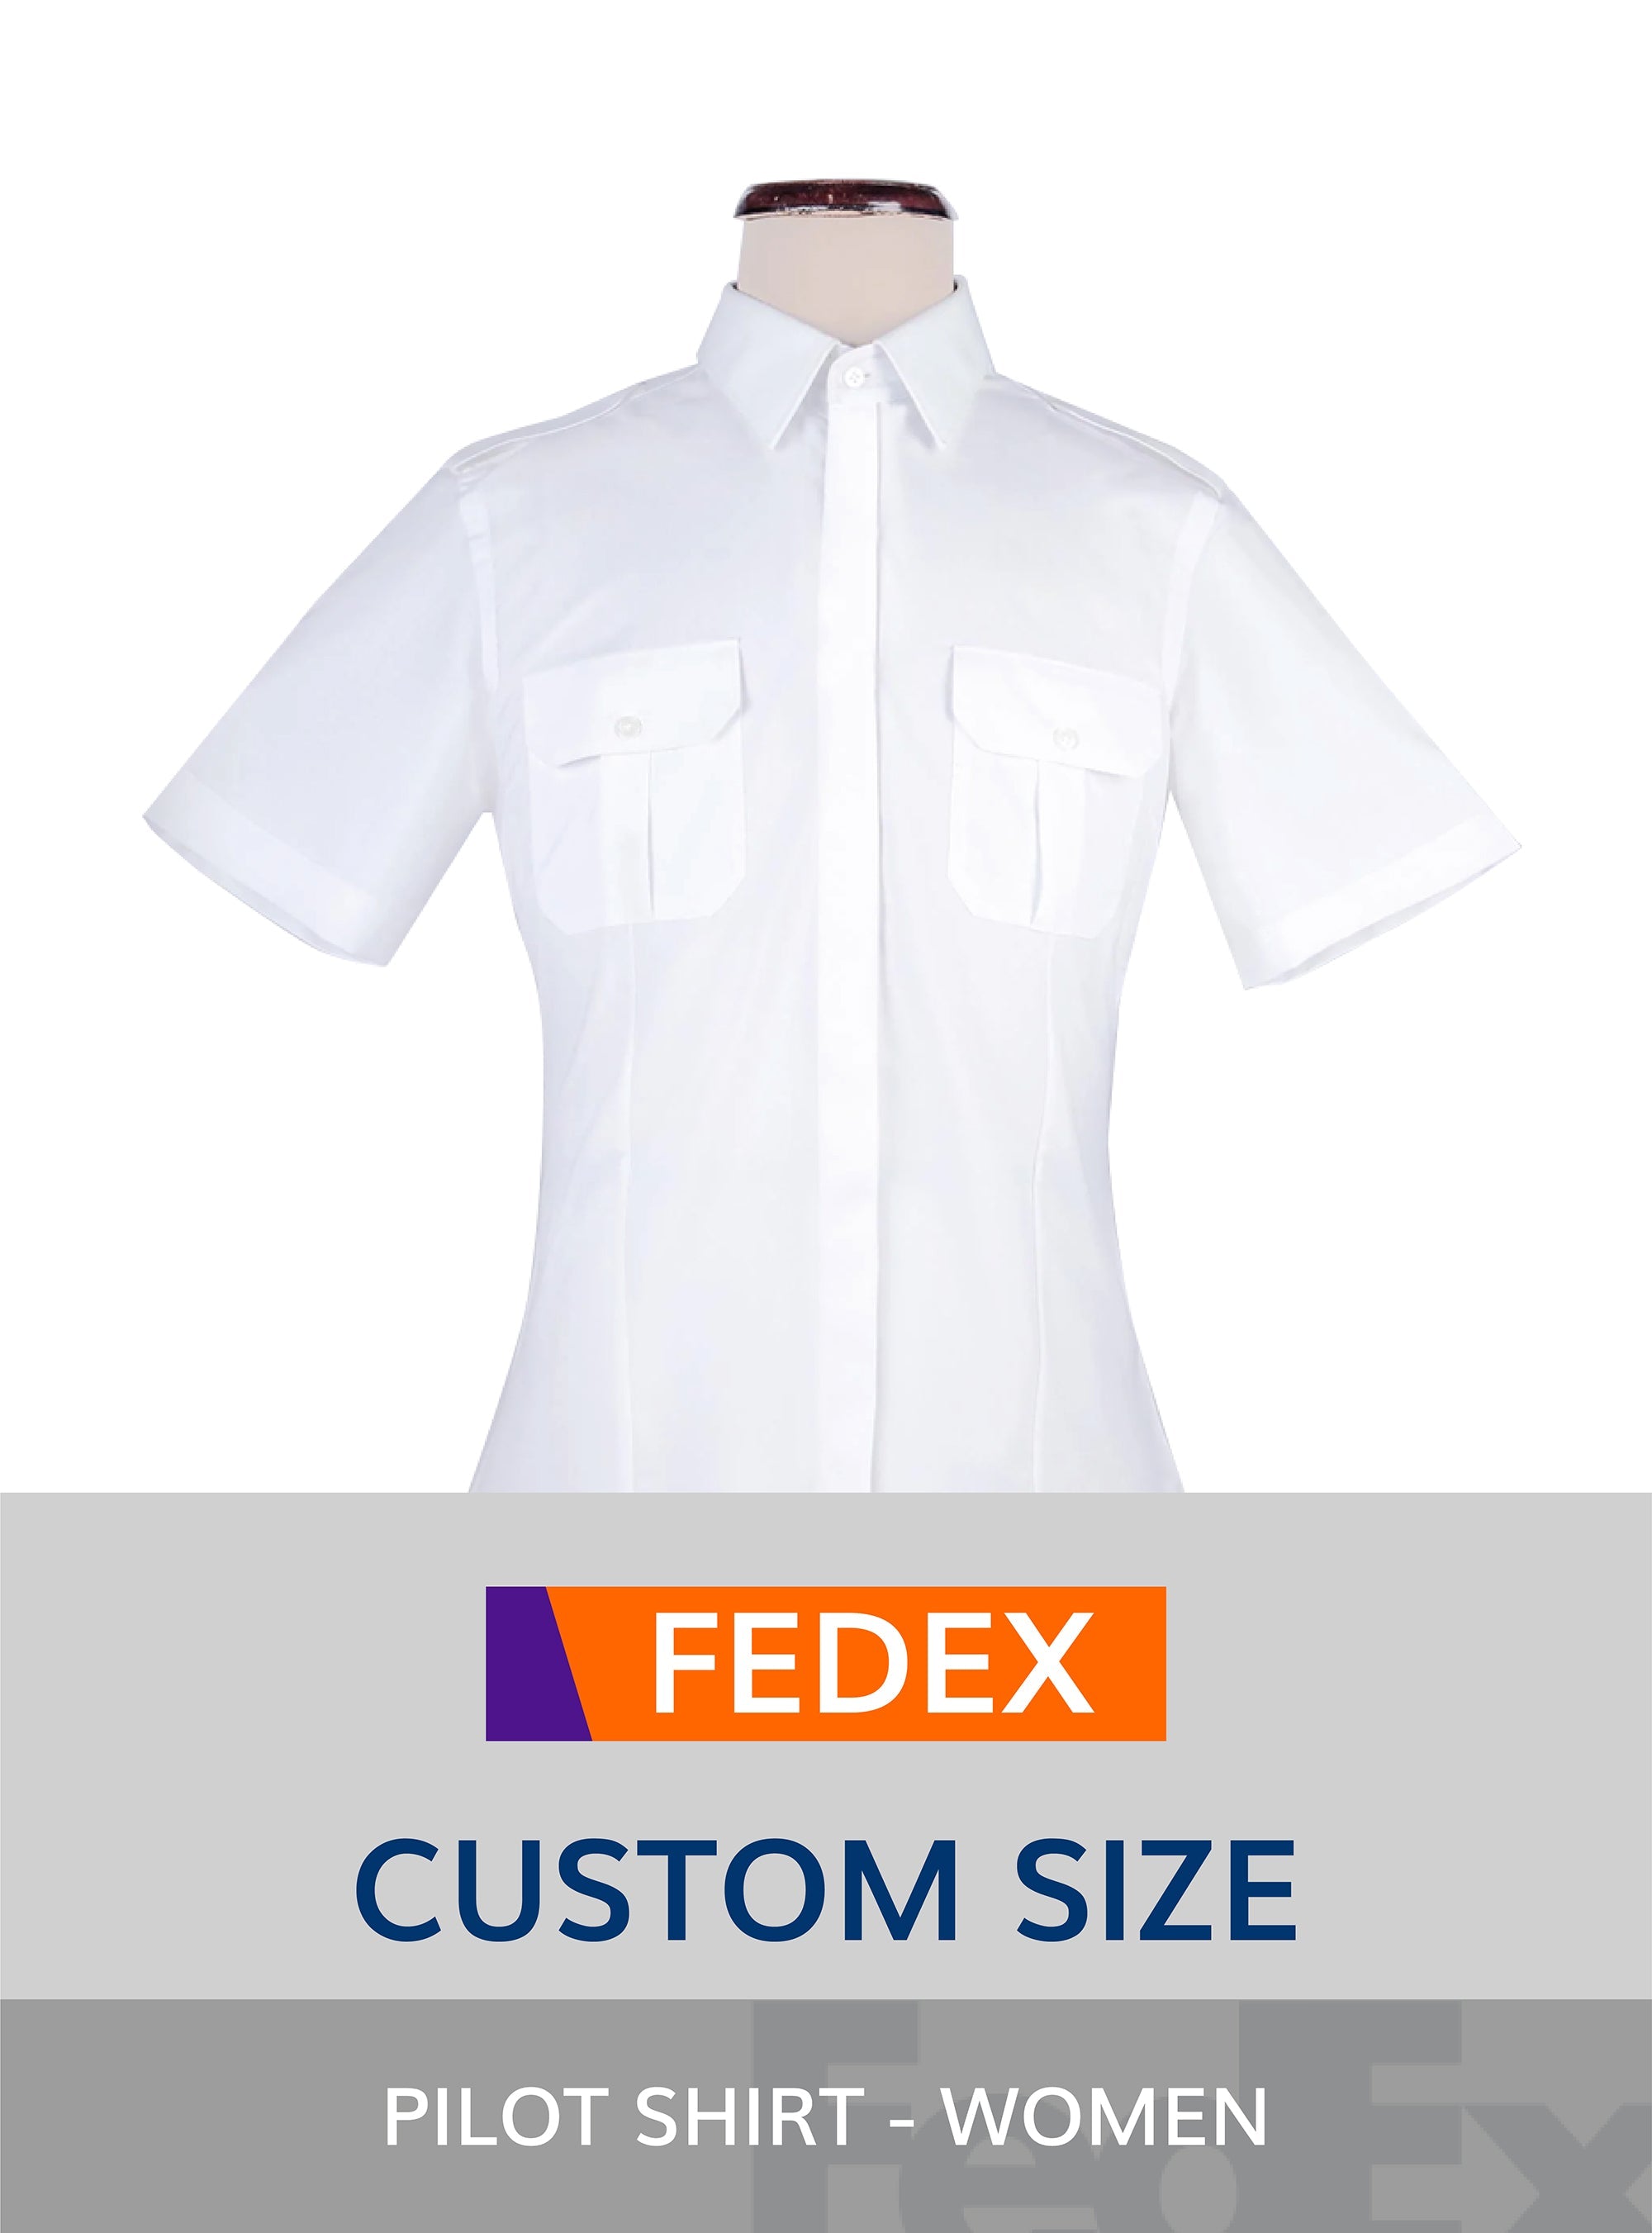 FEDEX Custom Size Pilot Shirt for women